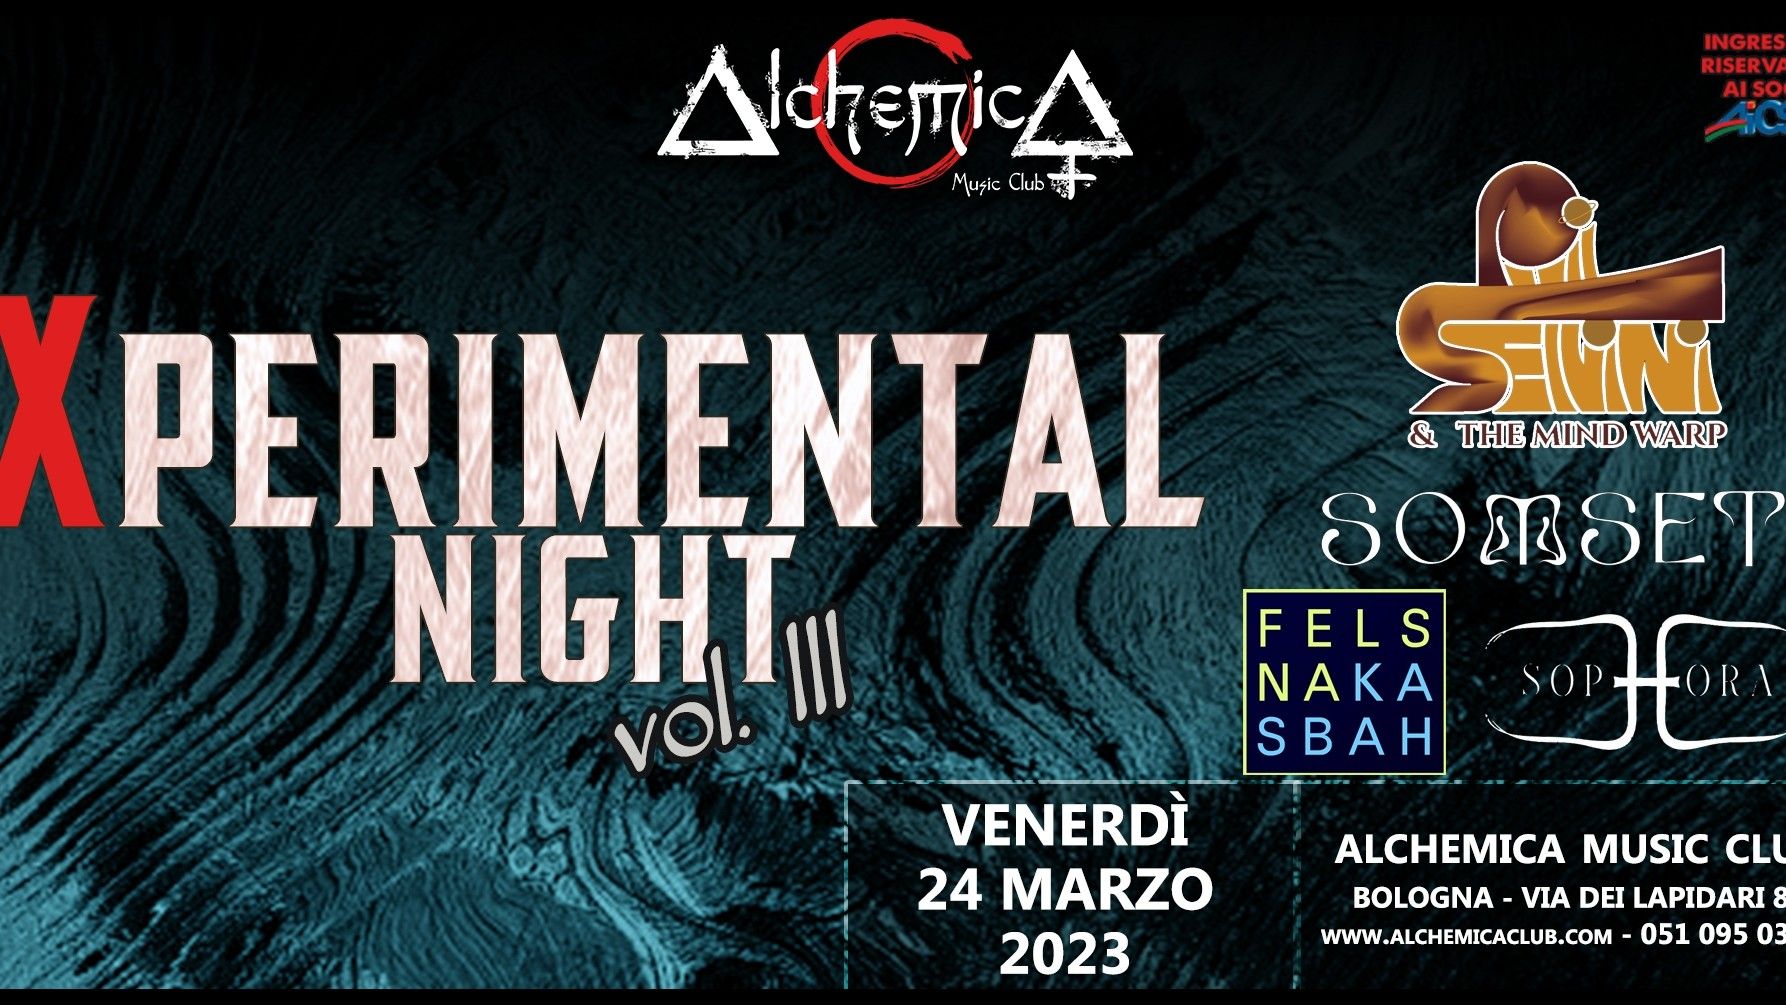 Xperimental Night_vol.3 | Phil Selvini + Somset + Felsna Kasbah + Sophora